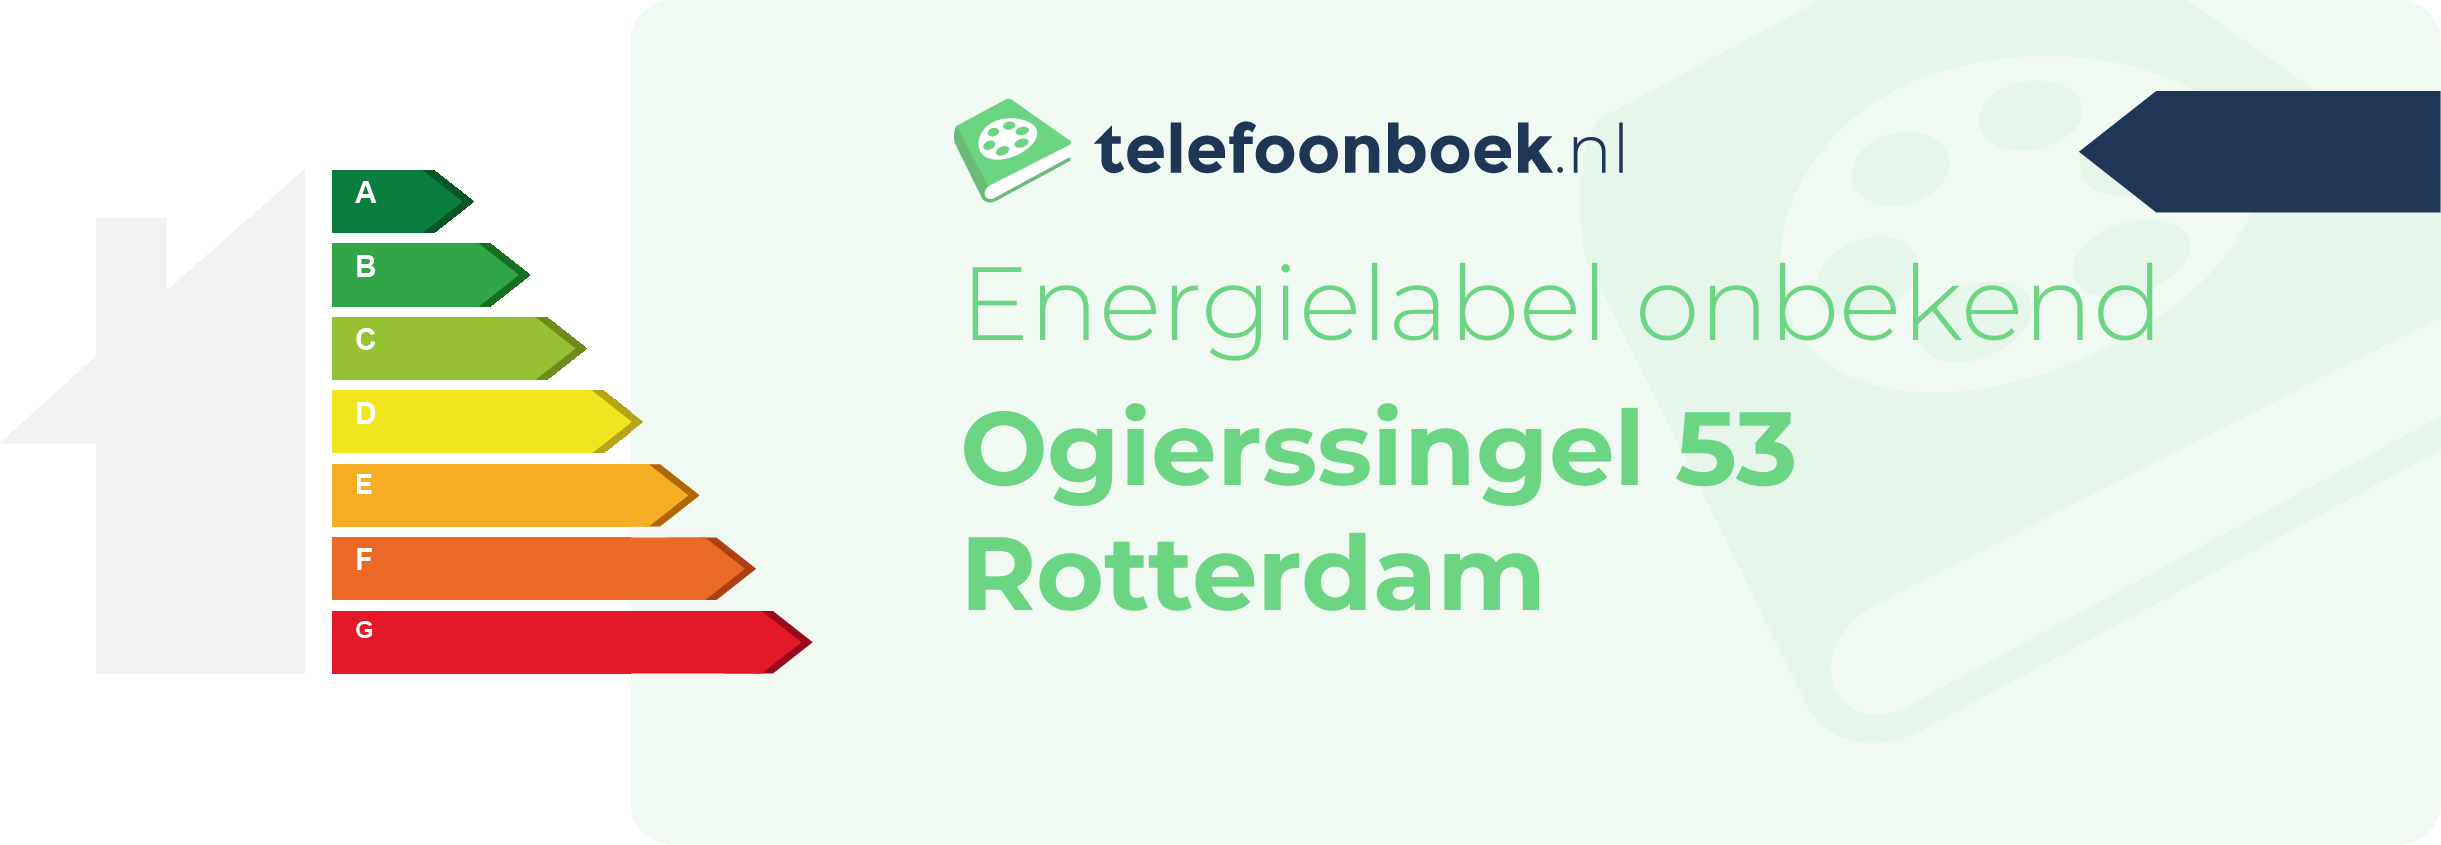 Energielabel Ogierssingel 53 Rotterdam